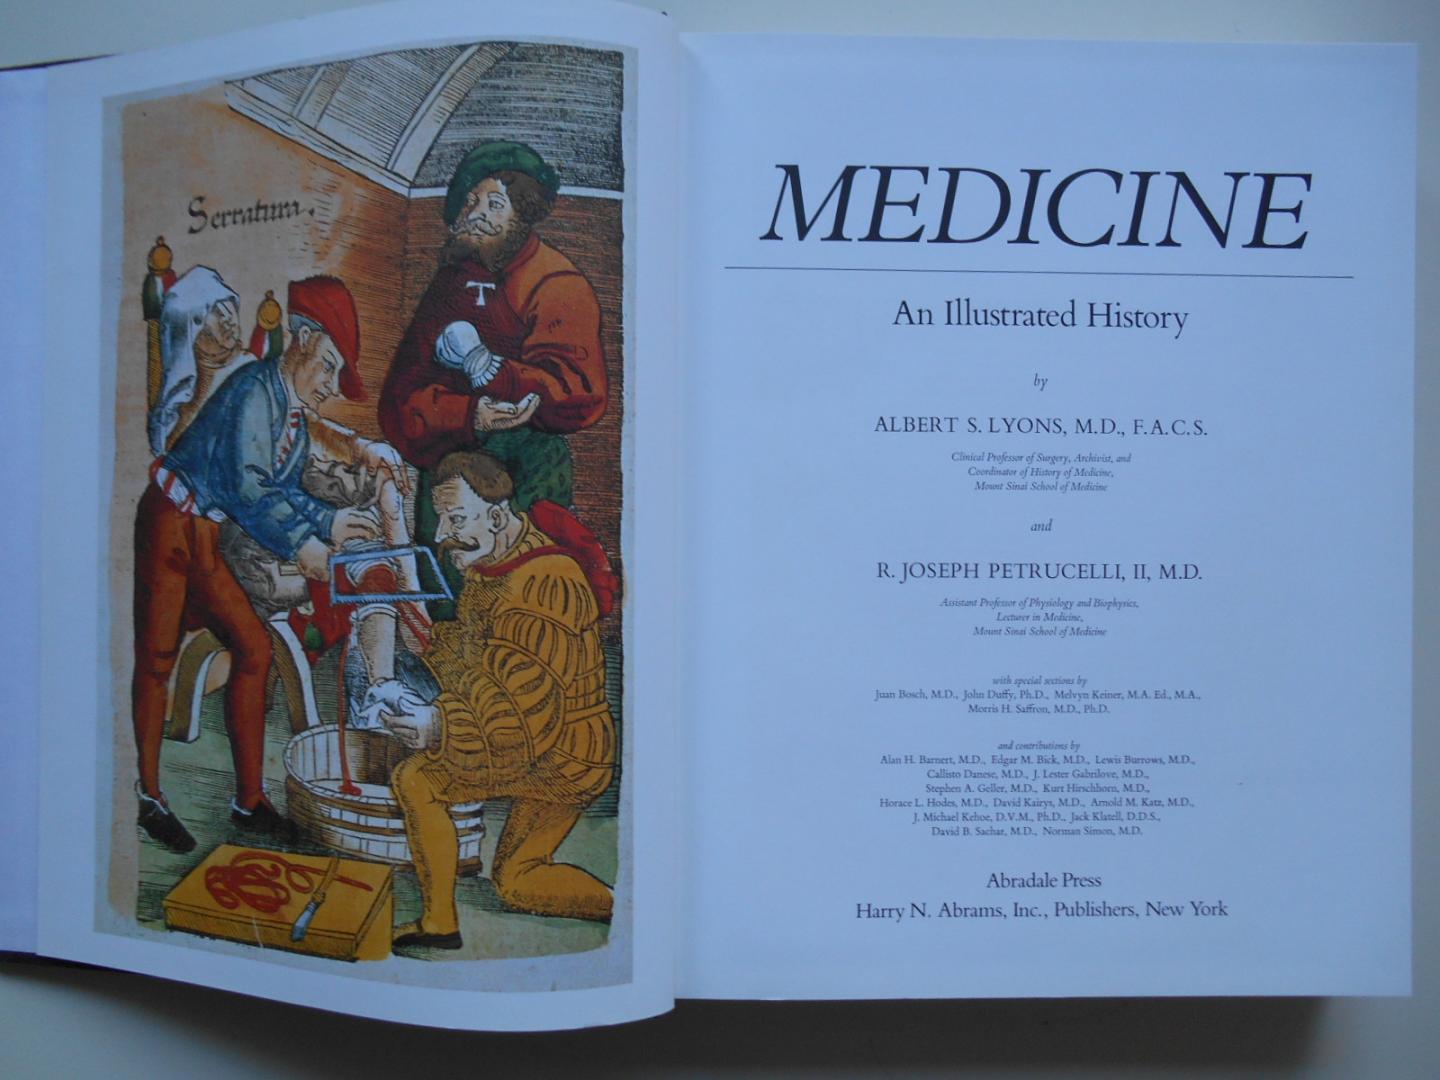 Lyons, Albert S. & Petrucelli, R. Joseph - Medicine - An Illustrated History